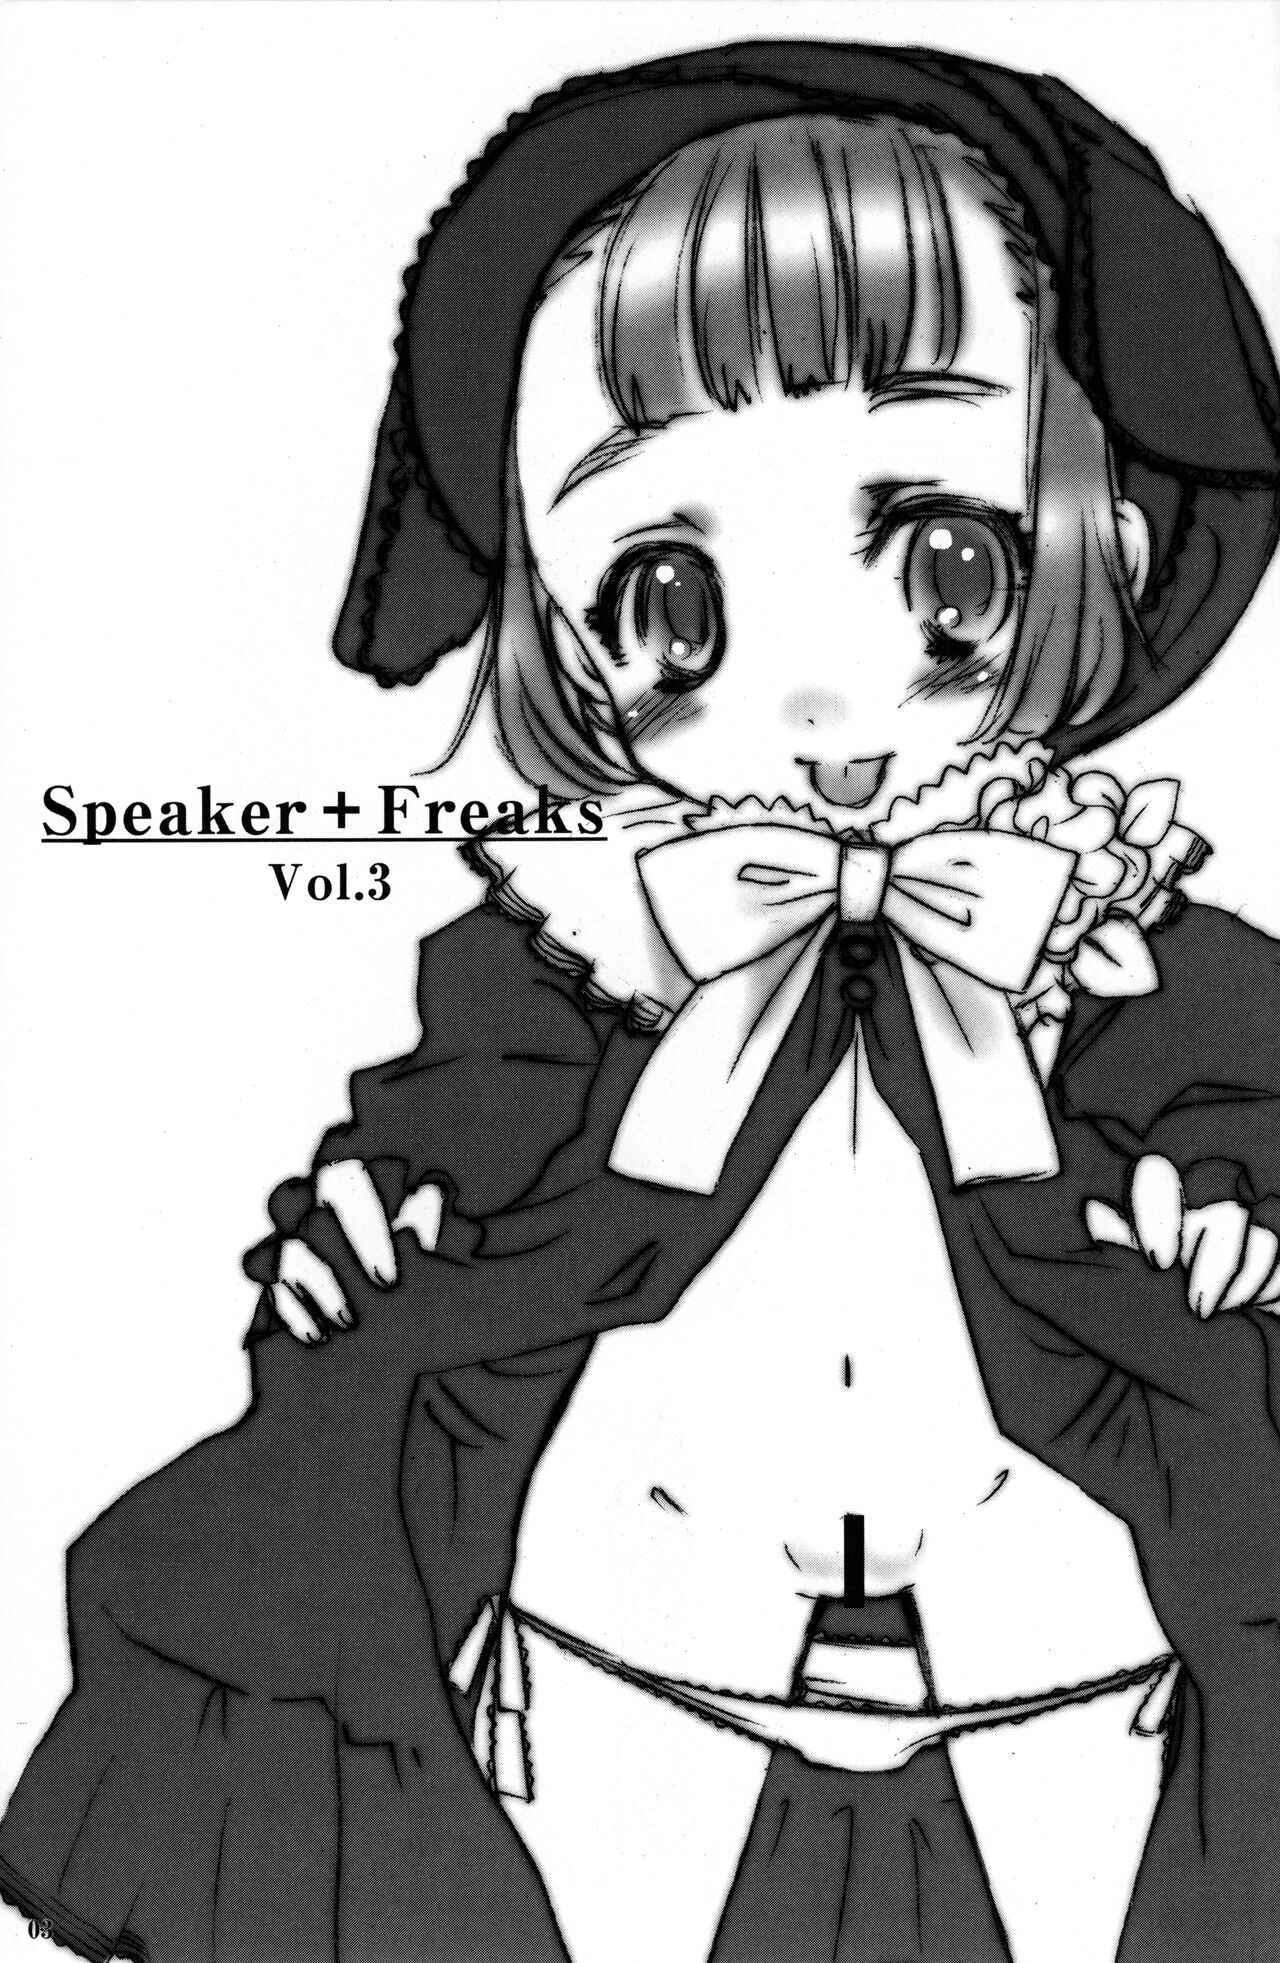 (COMIC1☆2) [atempo (KURO)] Speaker+Freaks vol.3